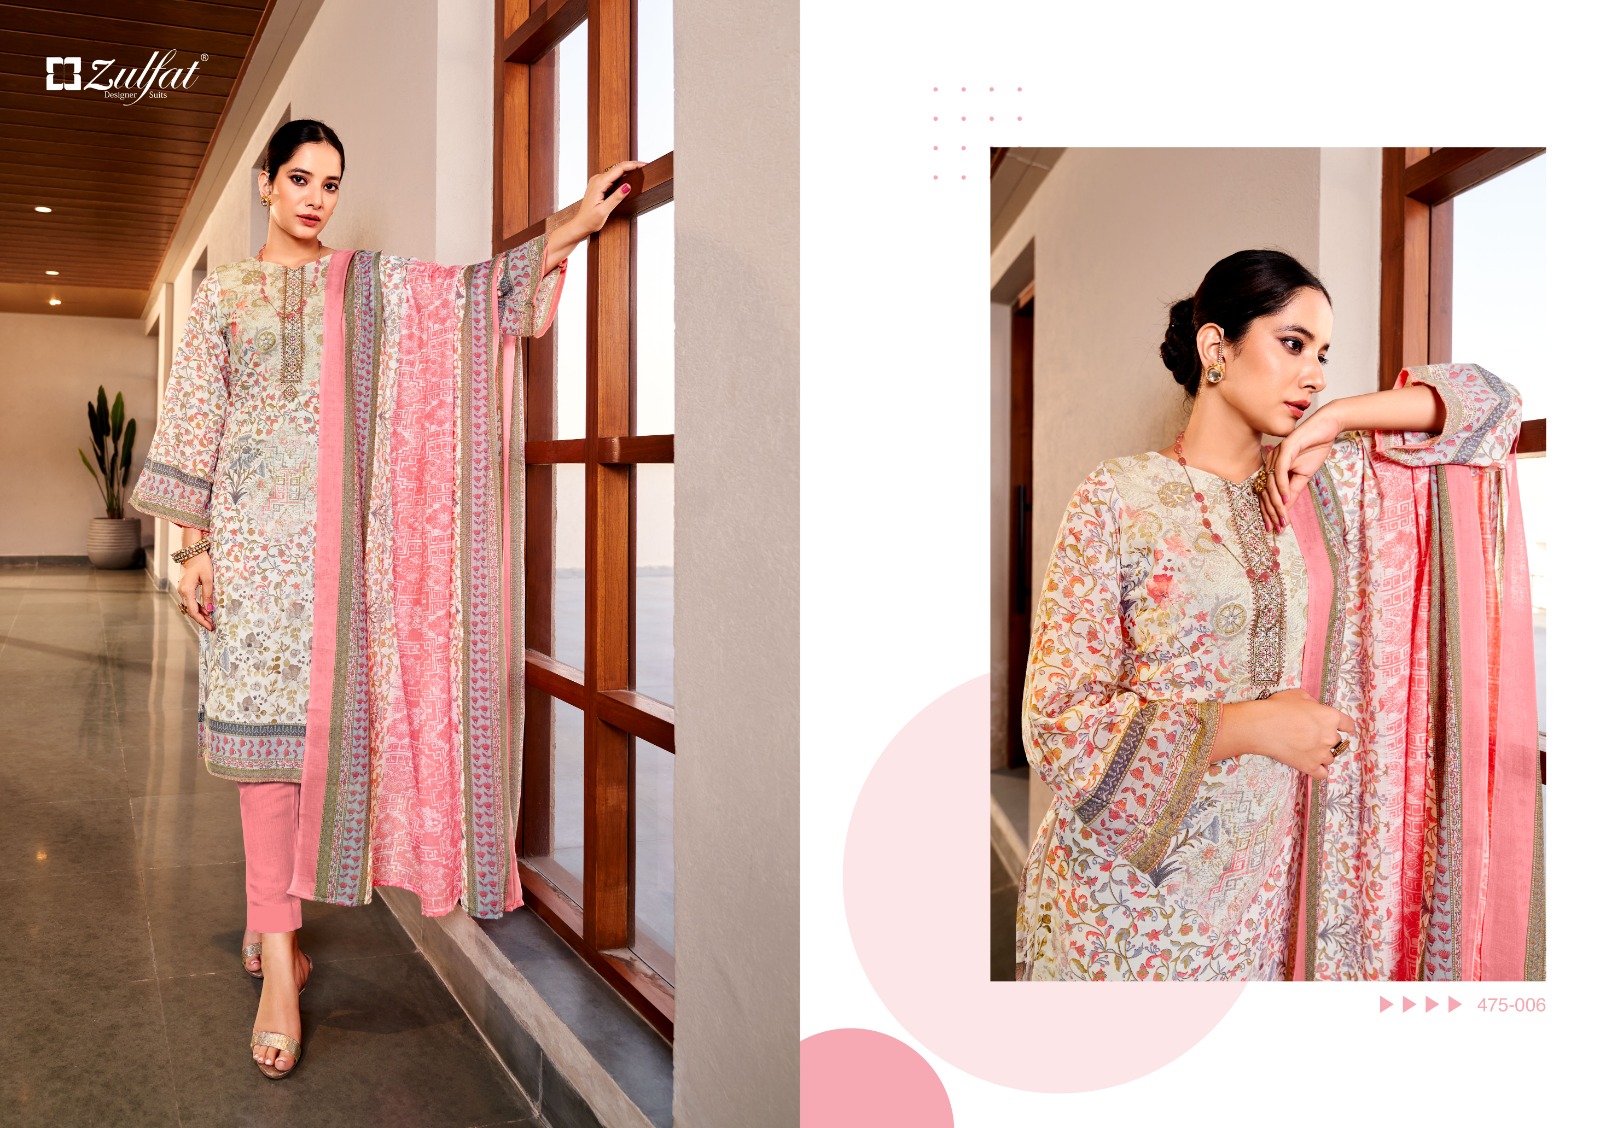 zulfat designer suit kavya cotton graceful look salwar suit catalog